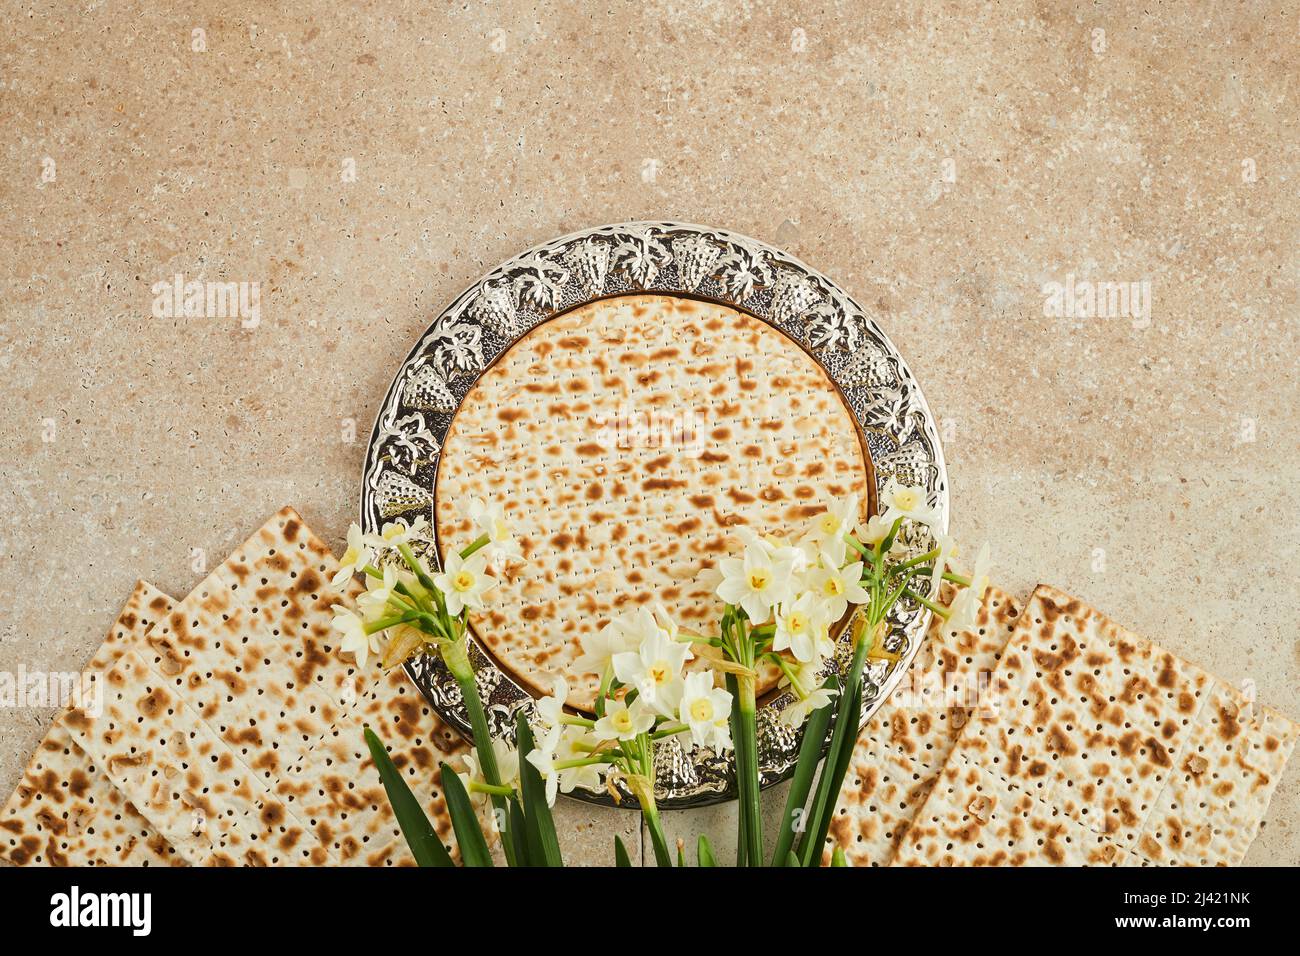 Pesah celebration concept, jewish Passover holiday. Traditional ritual ...